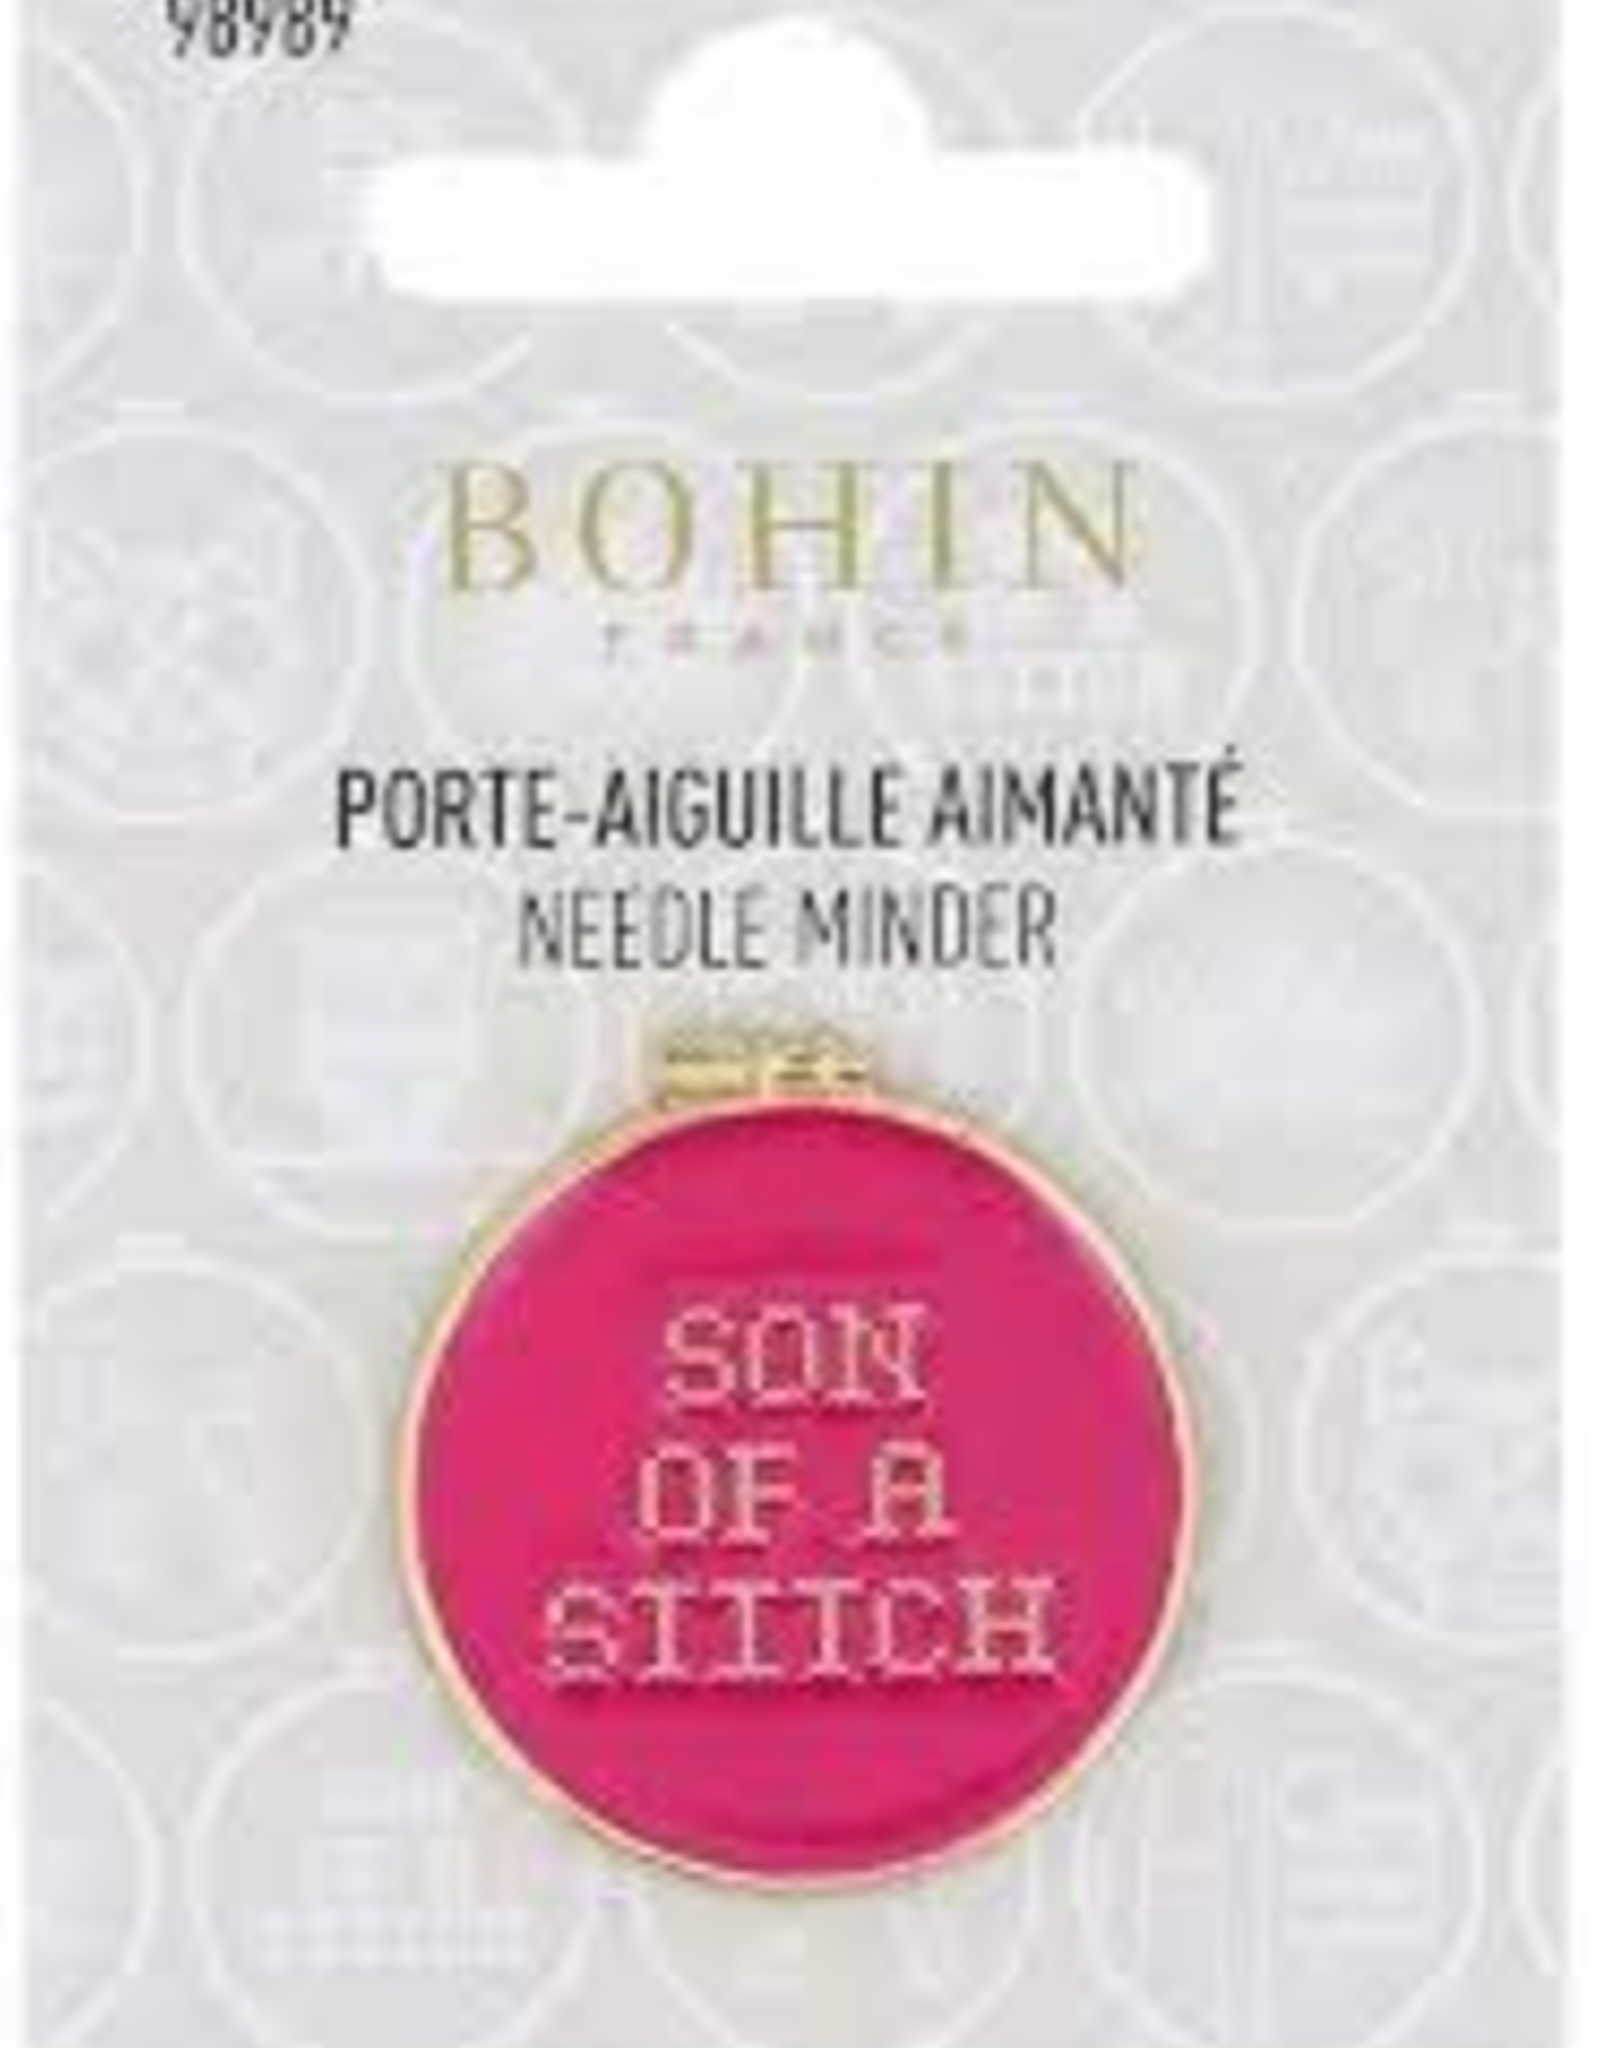 Bohin Needle Minder Son of a Stitch